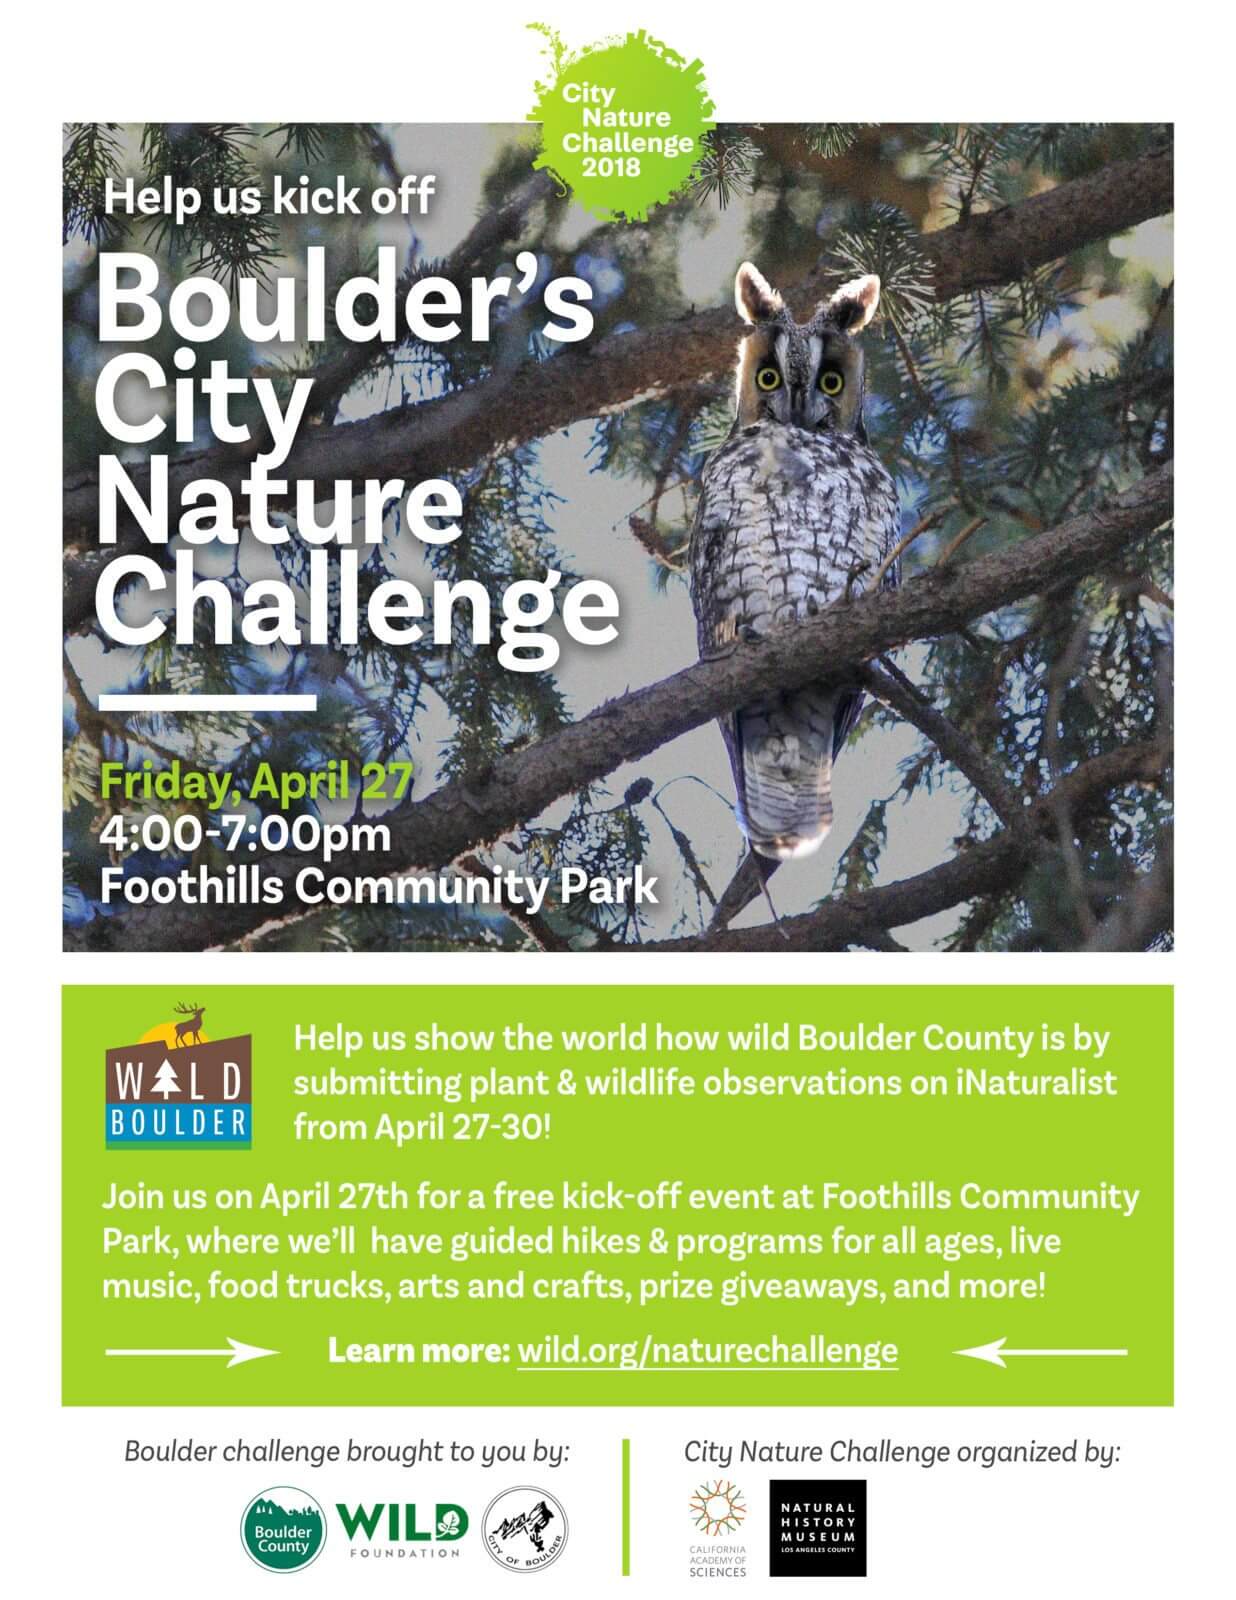 Graphic: City Nature Challenge starts on Friday